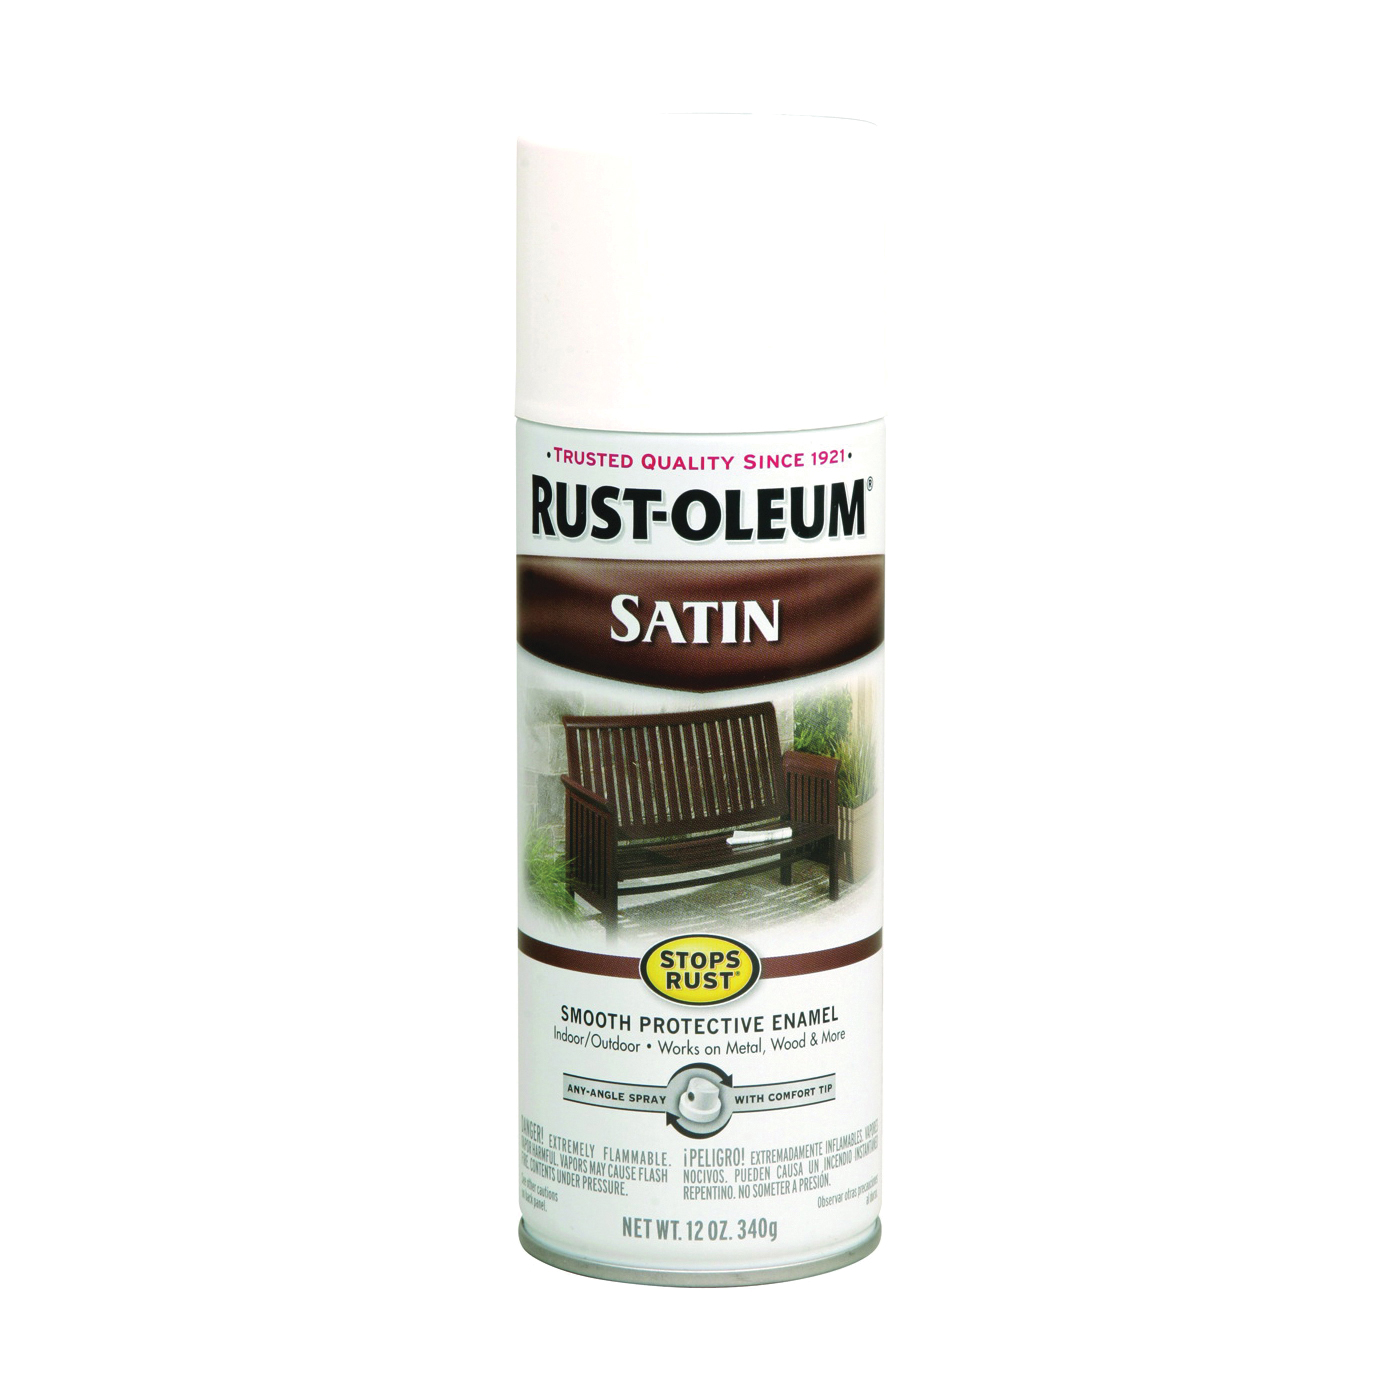 Rust-Oleum American Accents Satin White Decorative Paint Pen (6-pack)